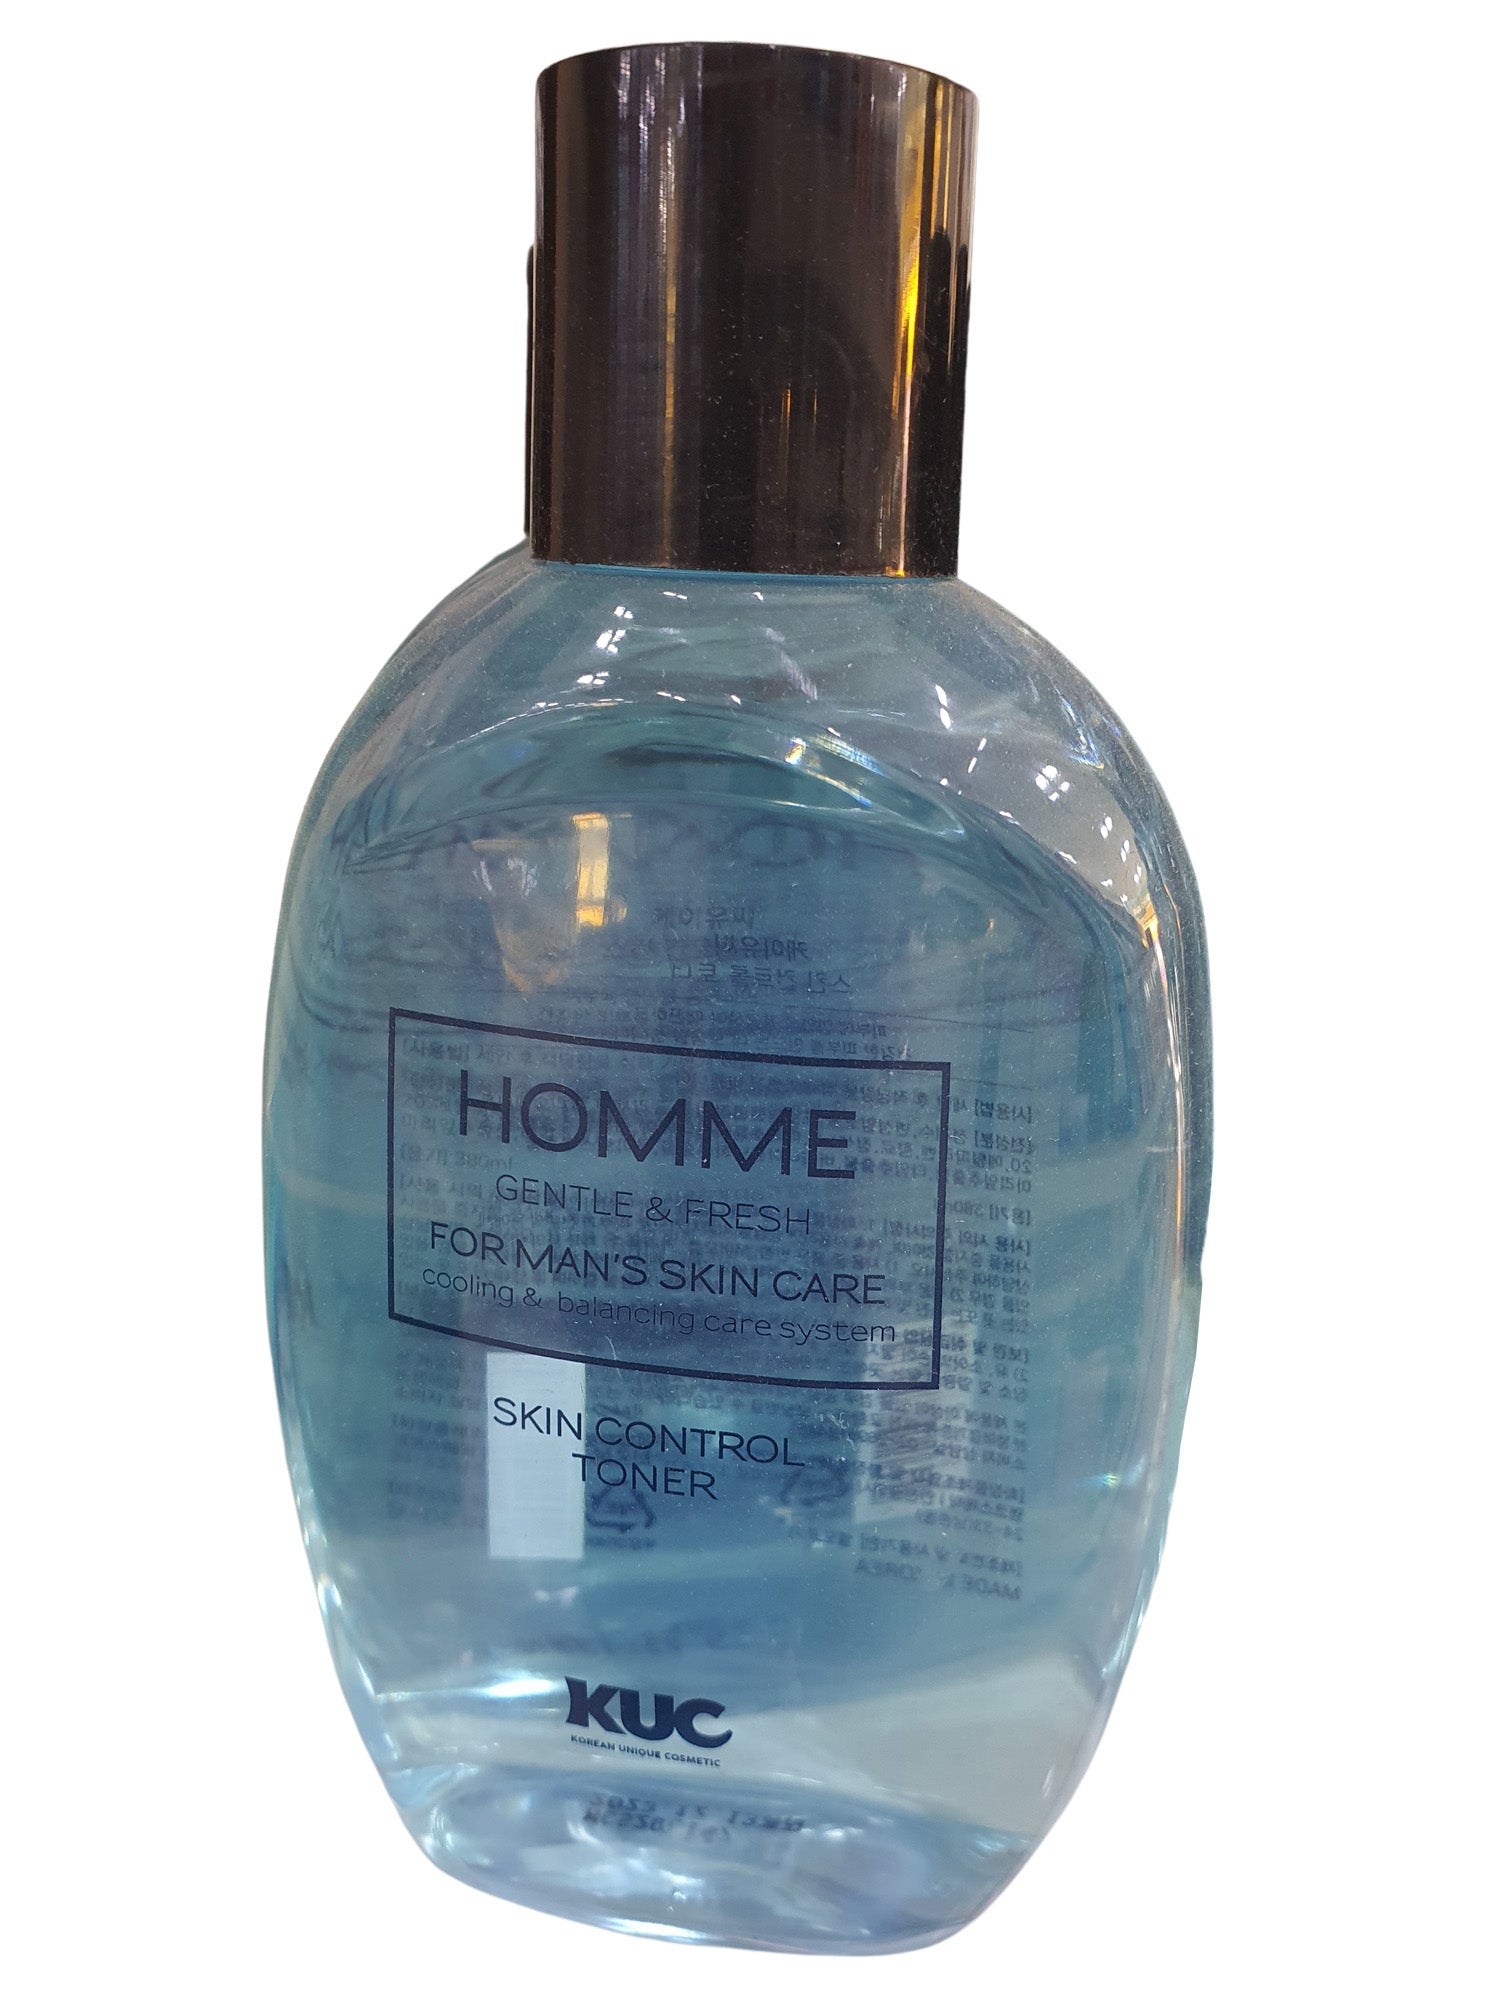 KUC Homme Gentle Fresh Skin Control Toner For Men Moisture Pore Care